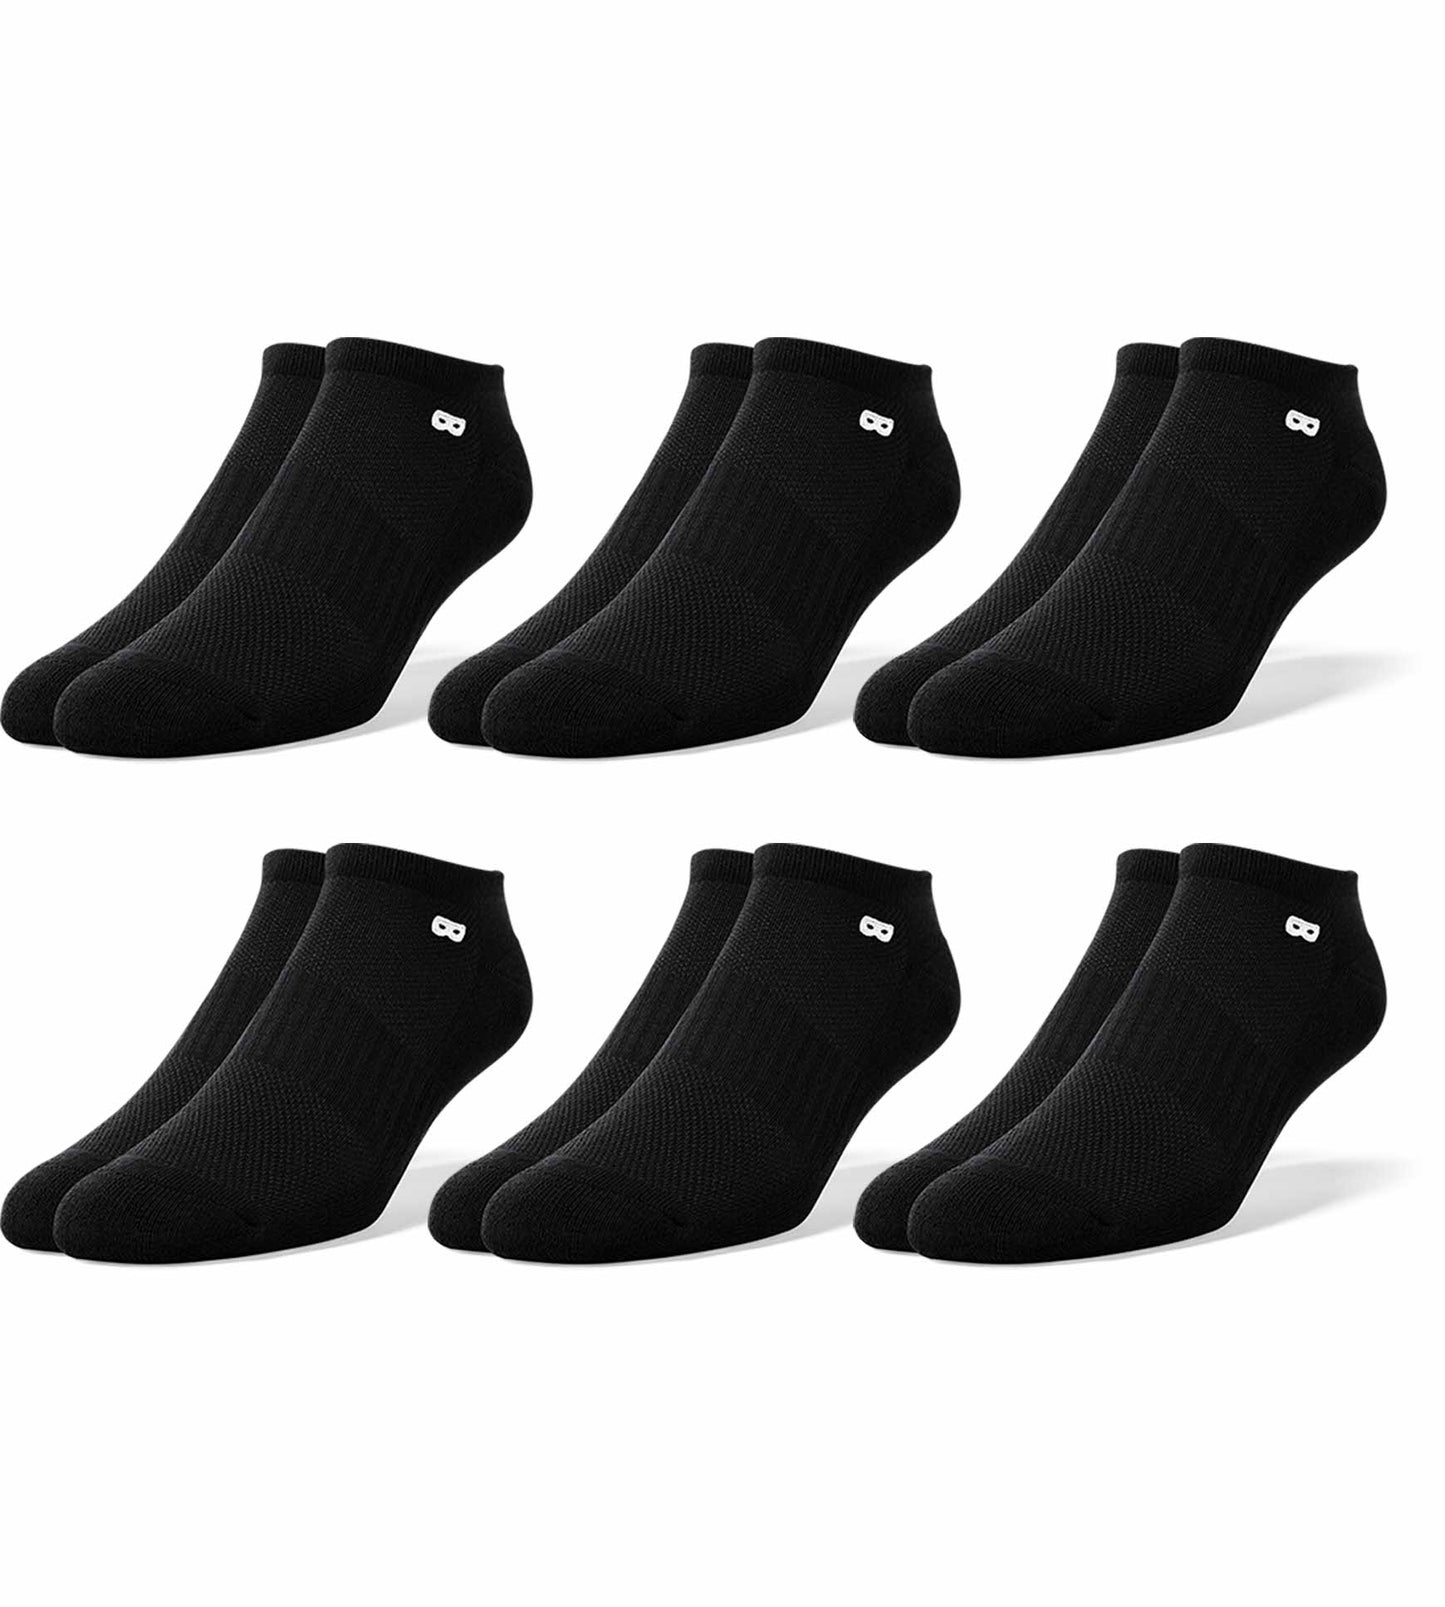 Bowo IV - Cushion Low-Cut Socks 6 Pack colors contain: Black, White, Black, Silver, Dark slate gray, Dim gray, Gray, Black, Gains boro, Dark slate gray